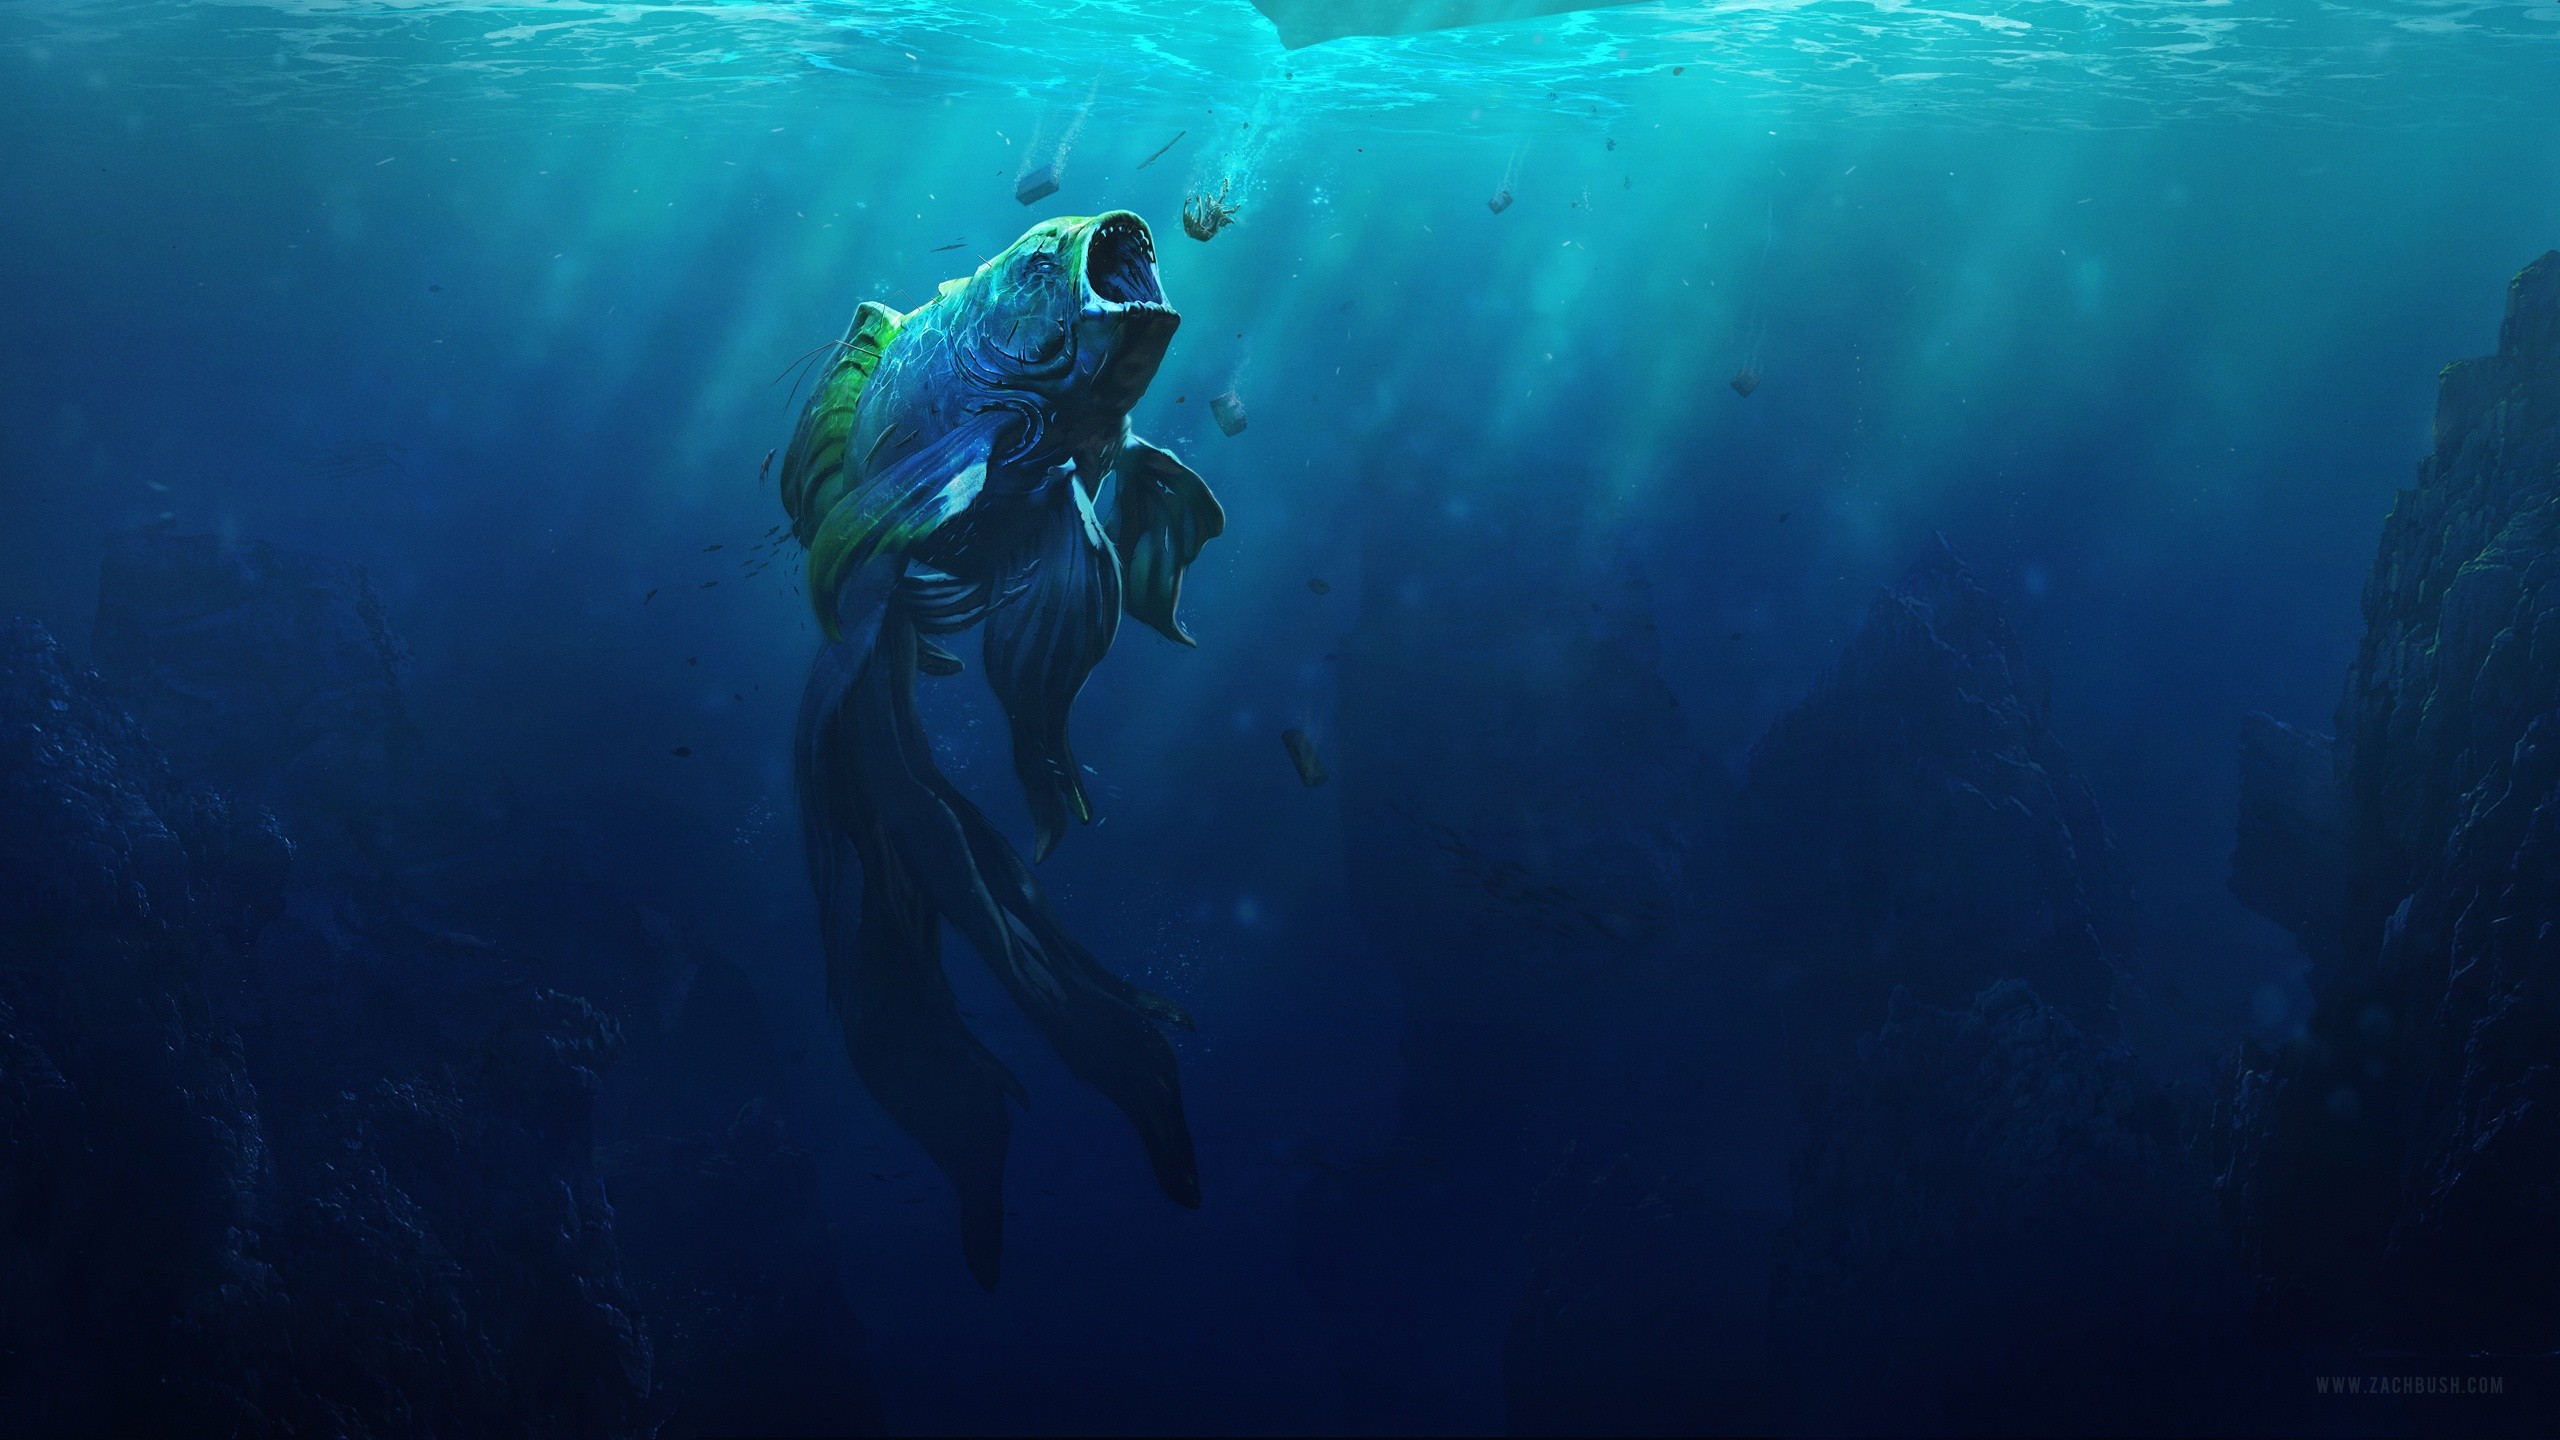 General 2560x1440 artwork fish underwater animals Desktopography